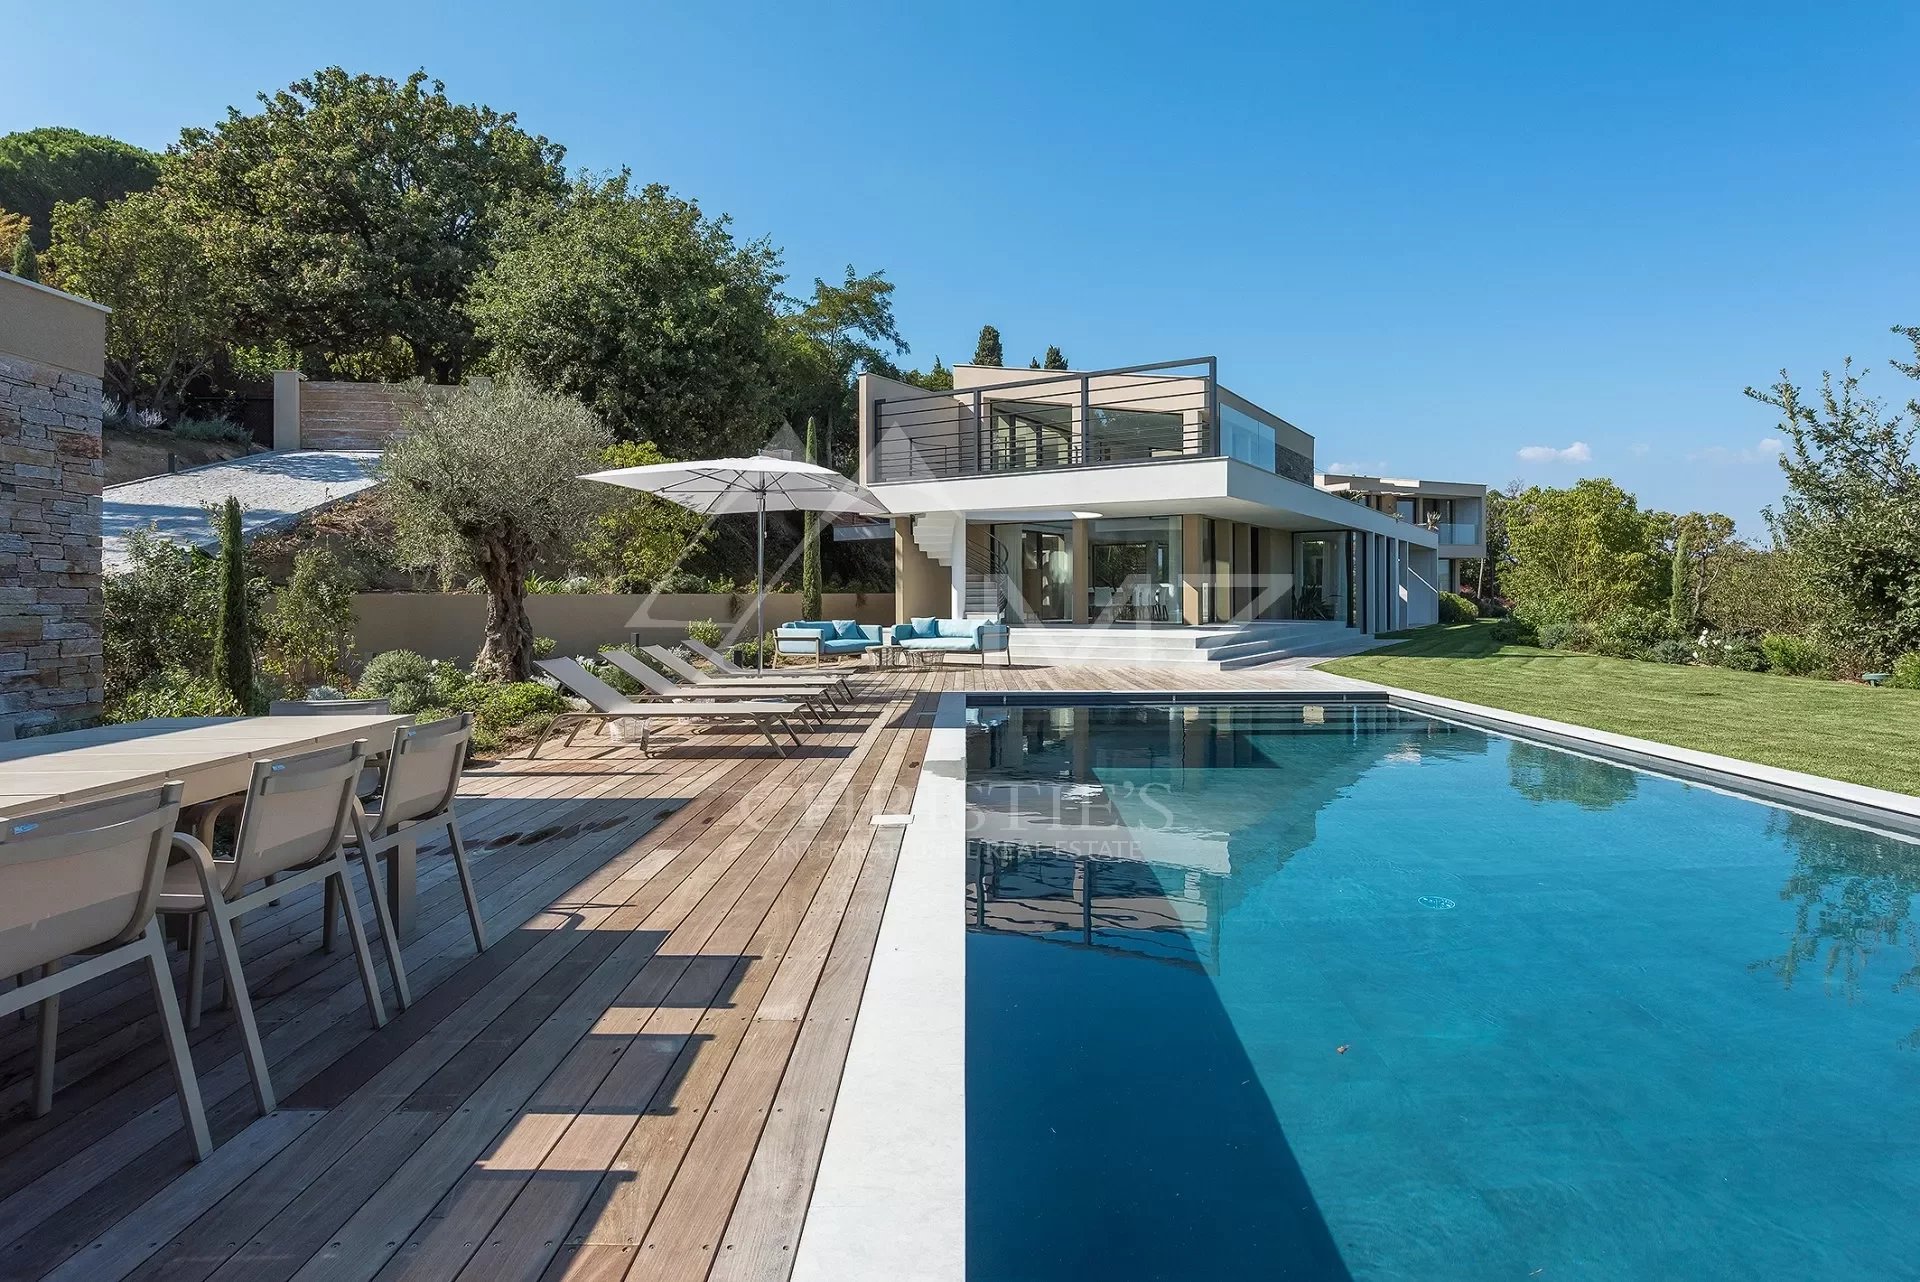 Saint-Tropez - Stunning contemporary villa